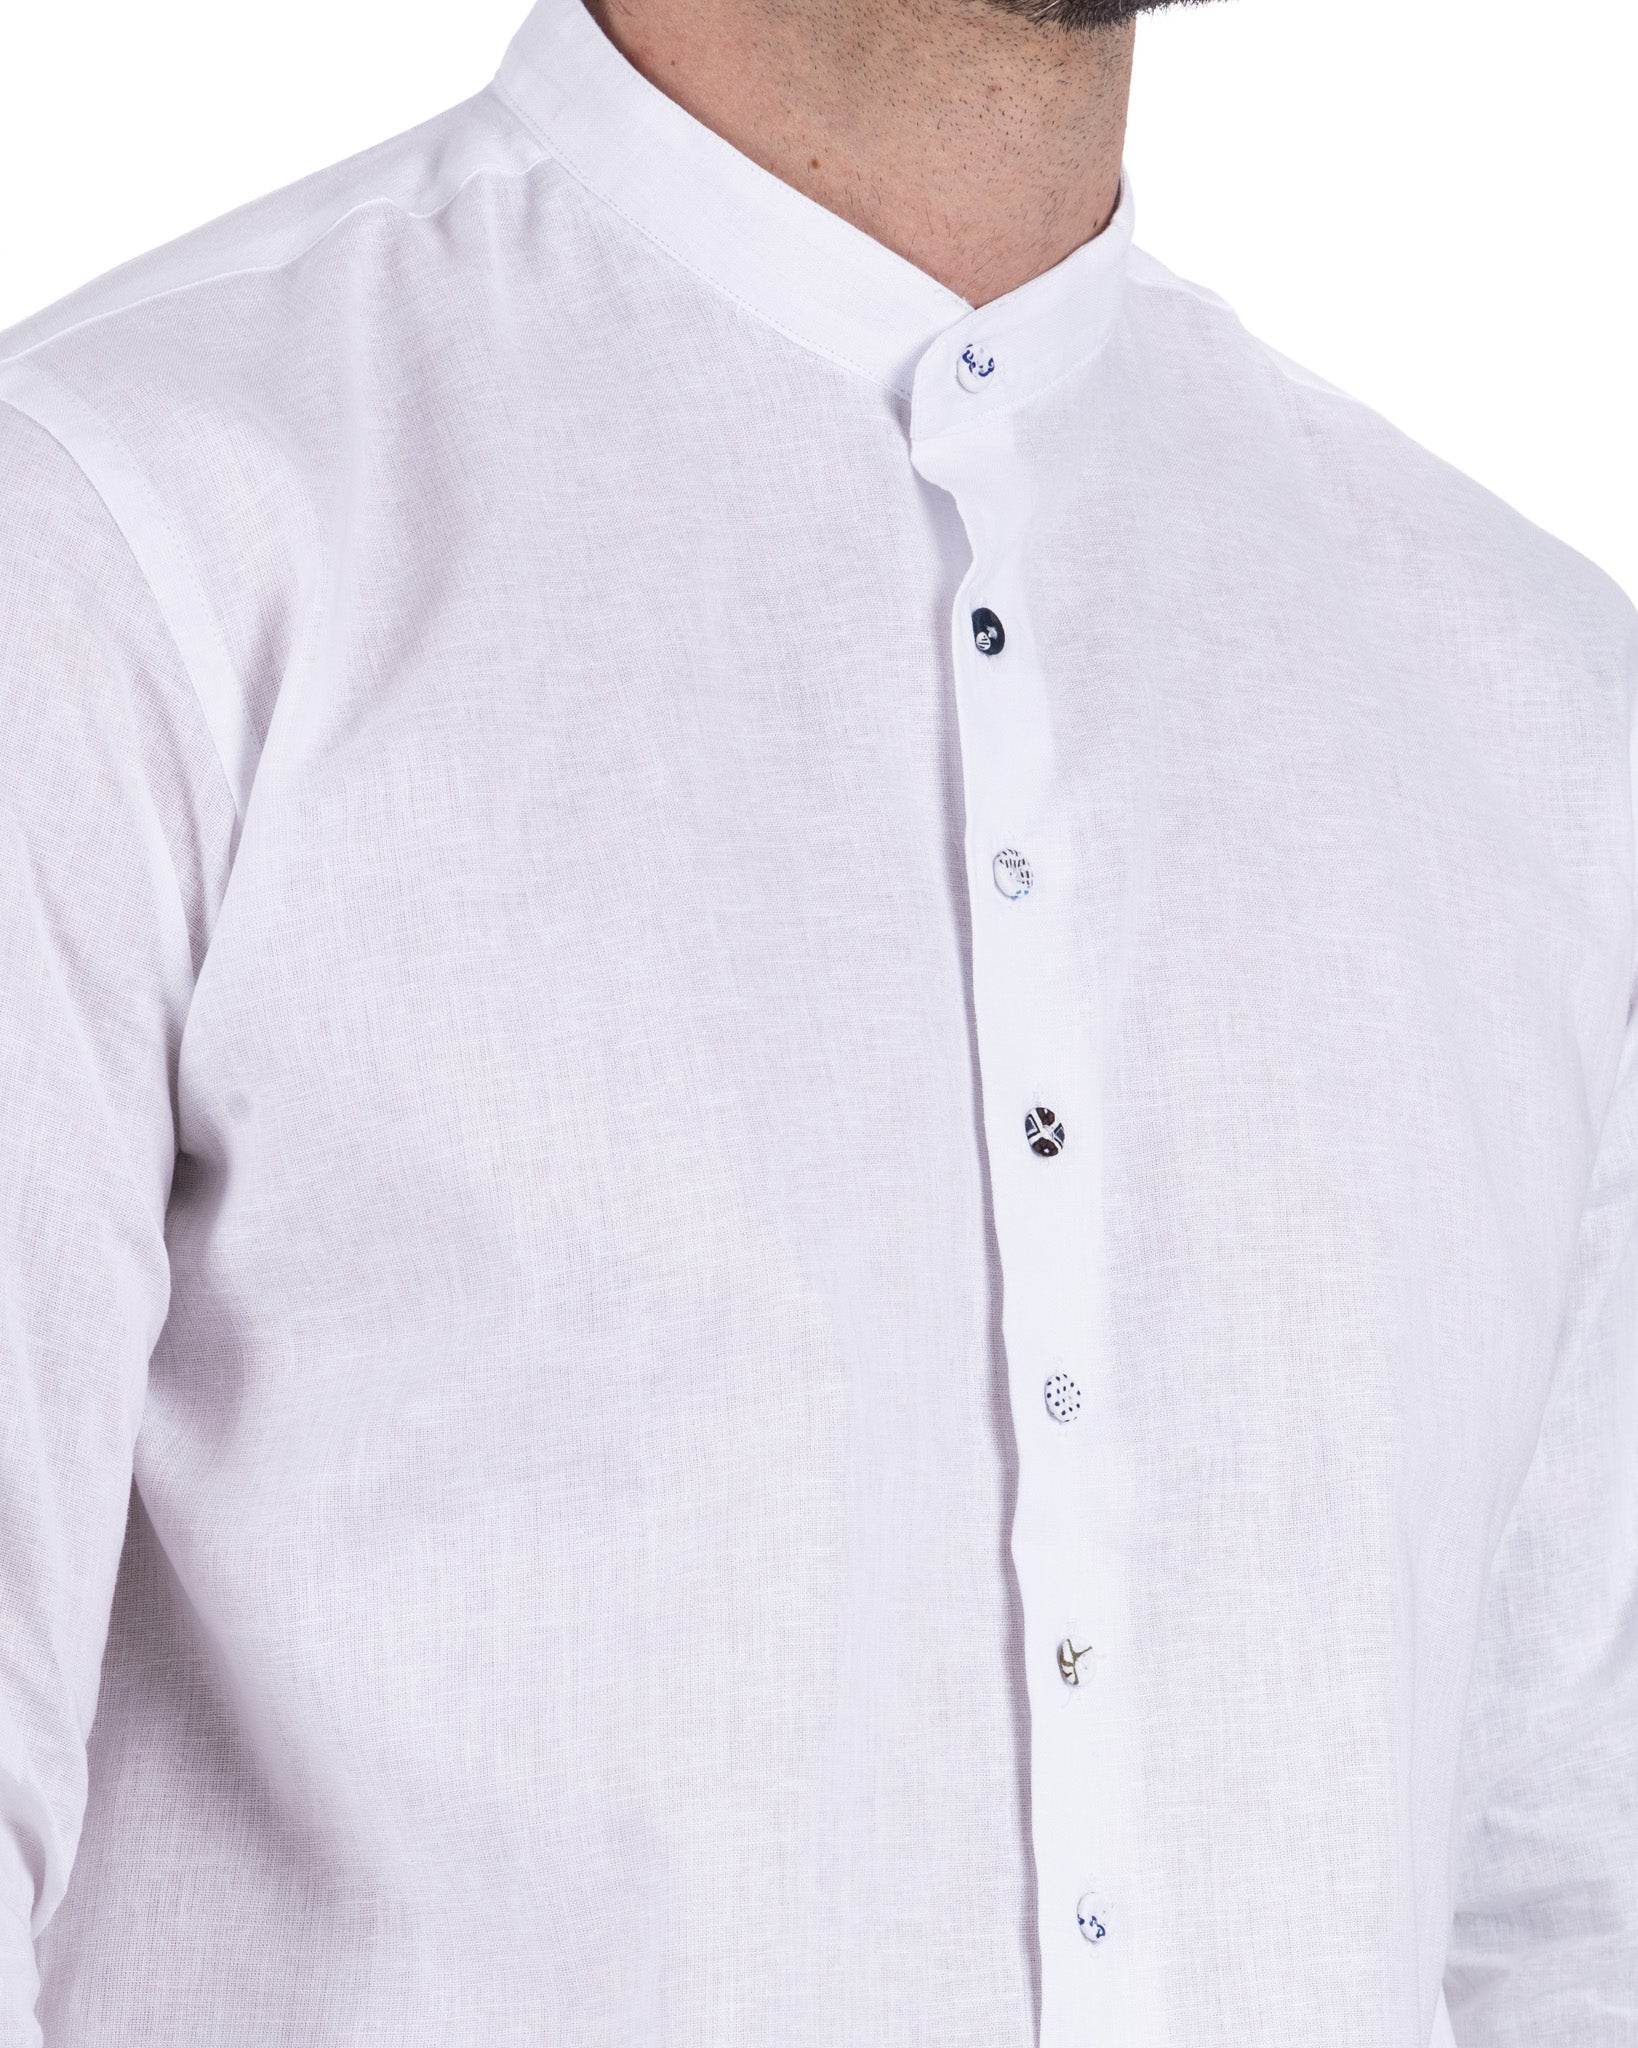 Positano - white linen Korean shirt